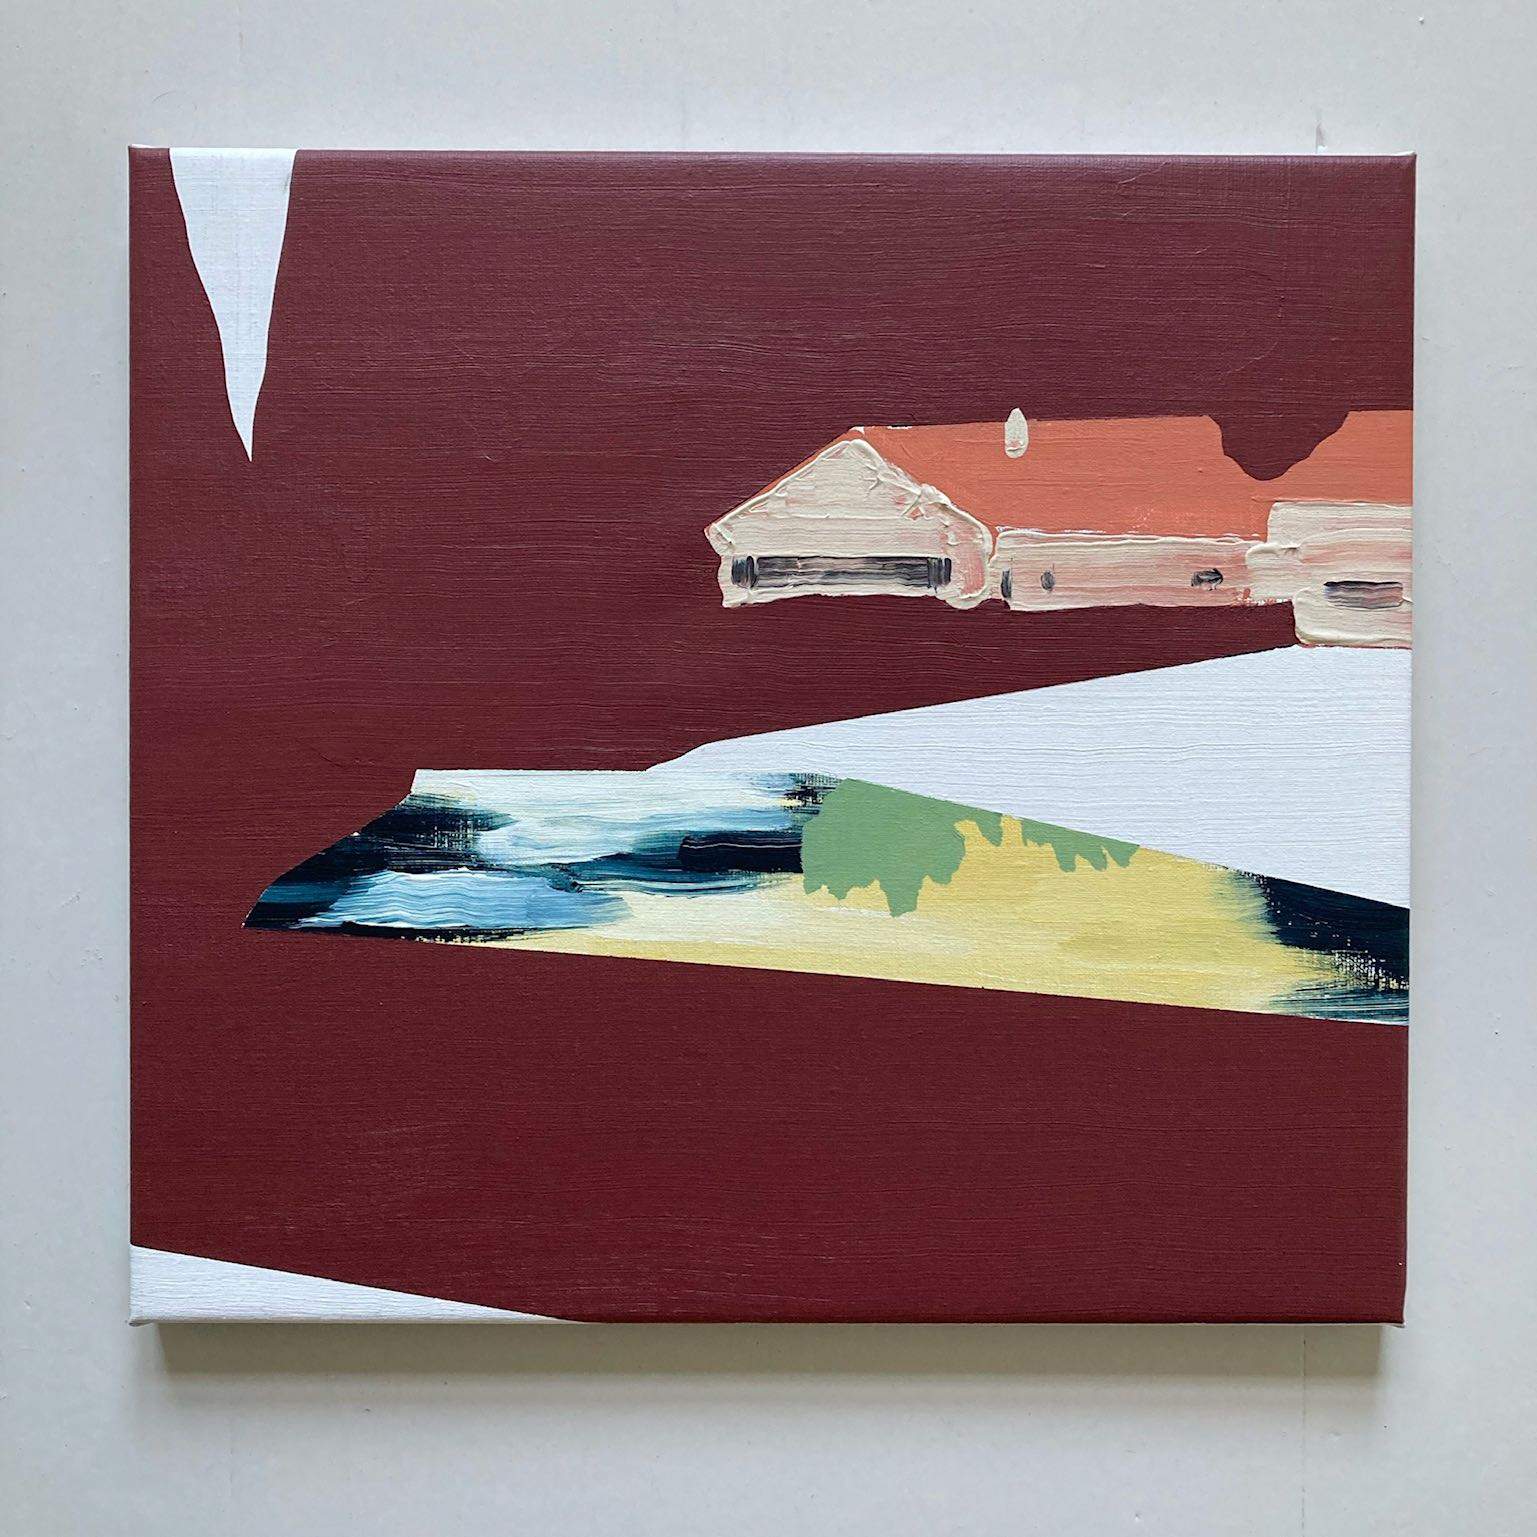 'amalgam', 42 x 46 cm, acrylics on canvas, 2021